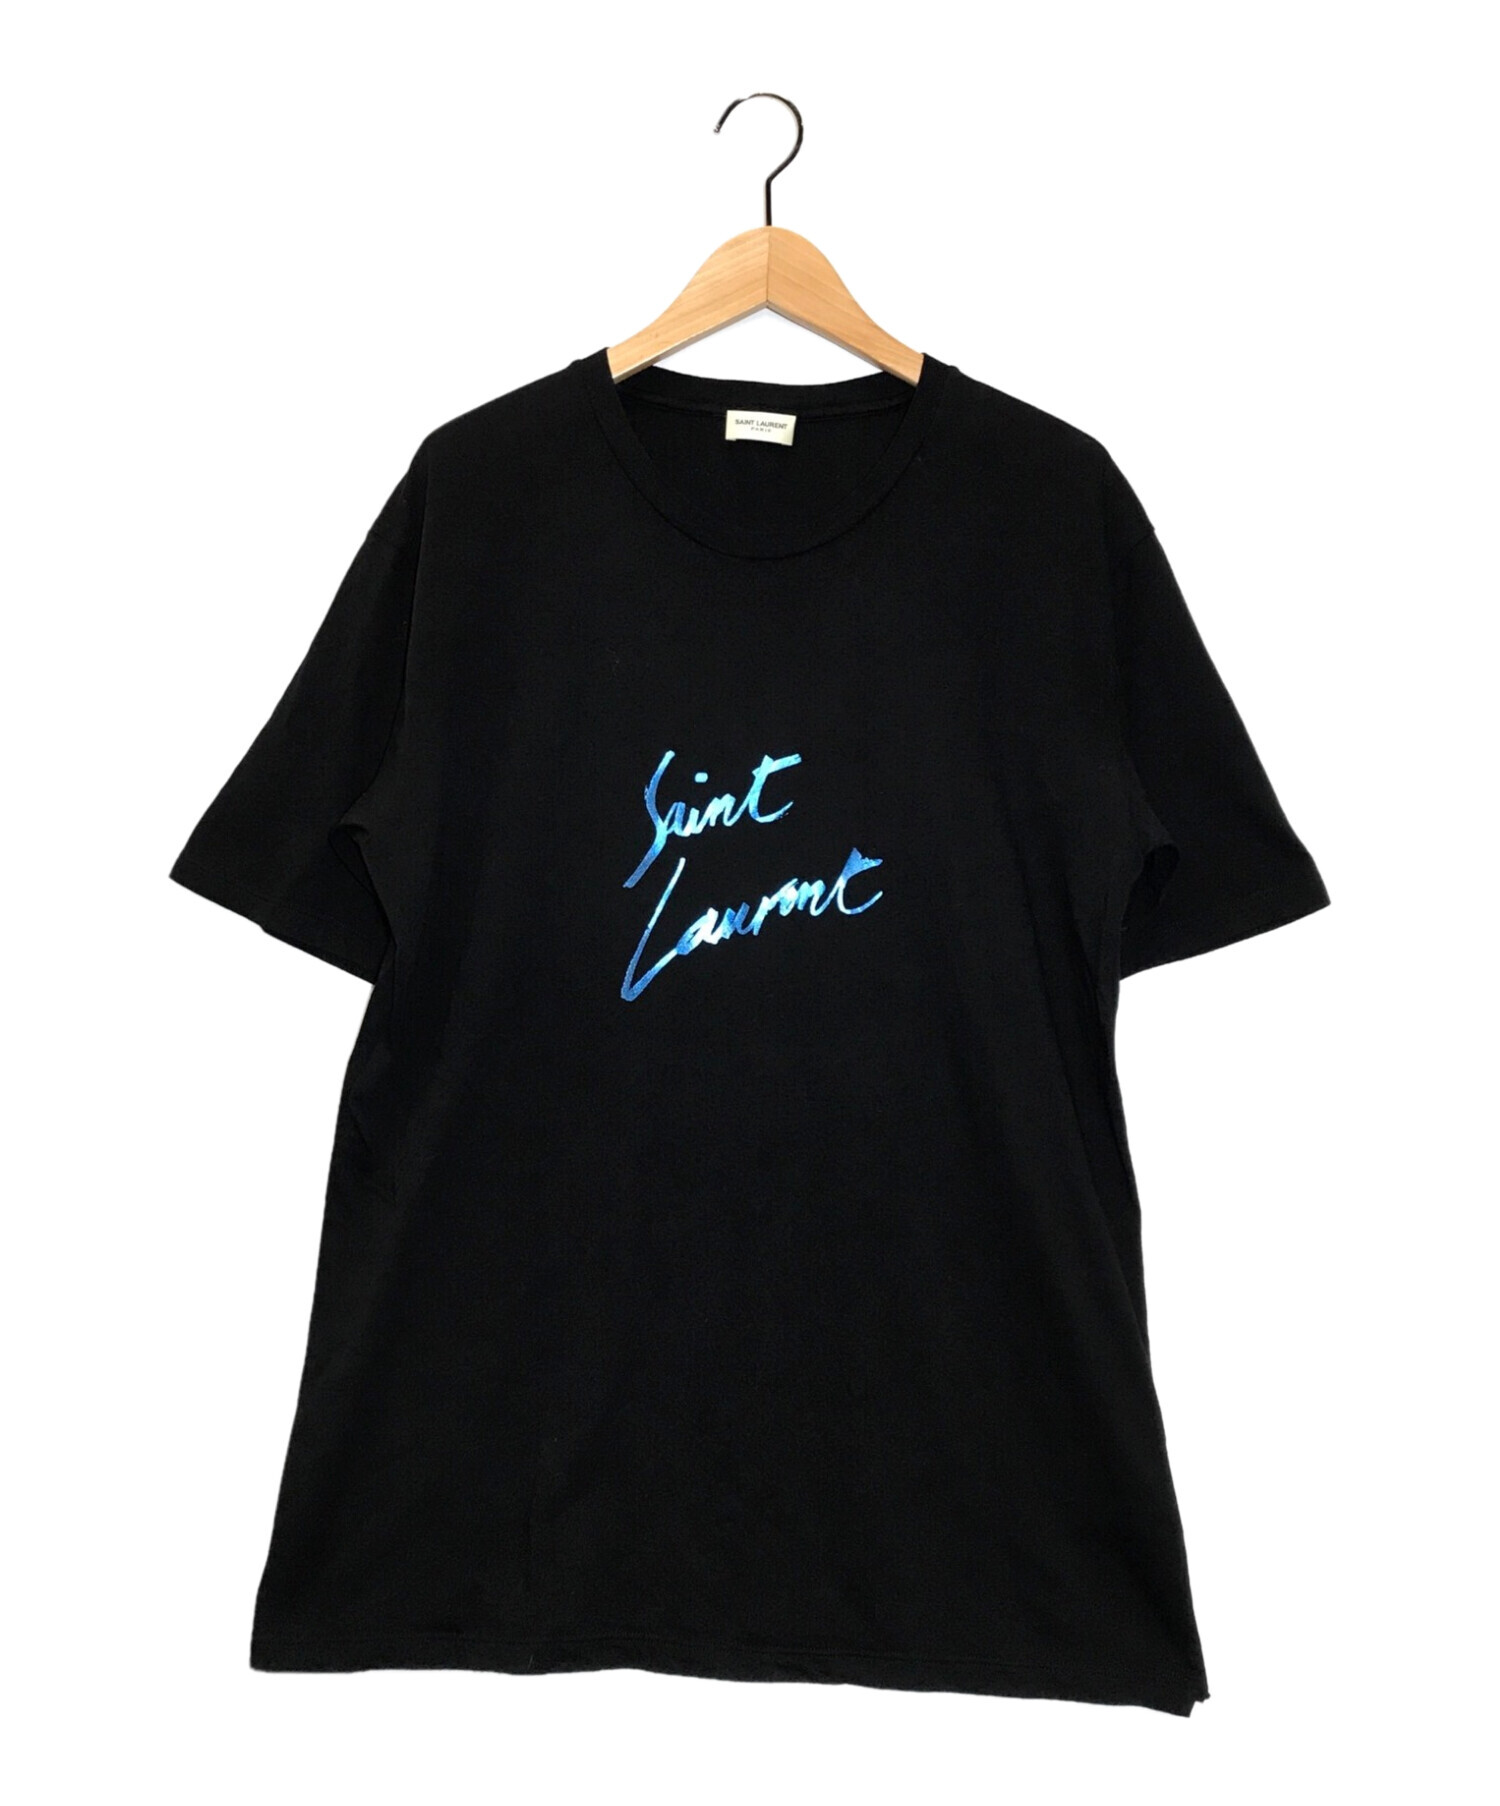 Saint Laurent Paris (サンローランパリ) オーバーサイズロゴプリントTシャツ ブラック サイズ:S